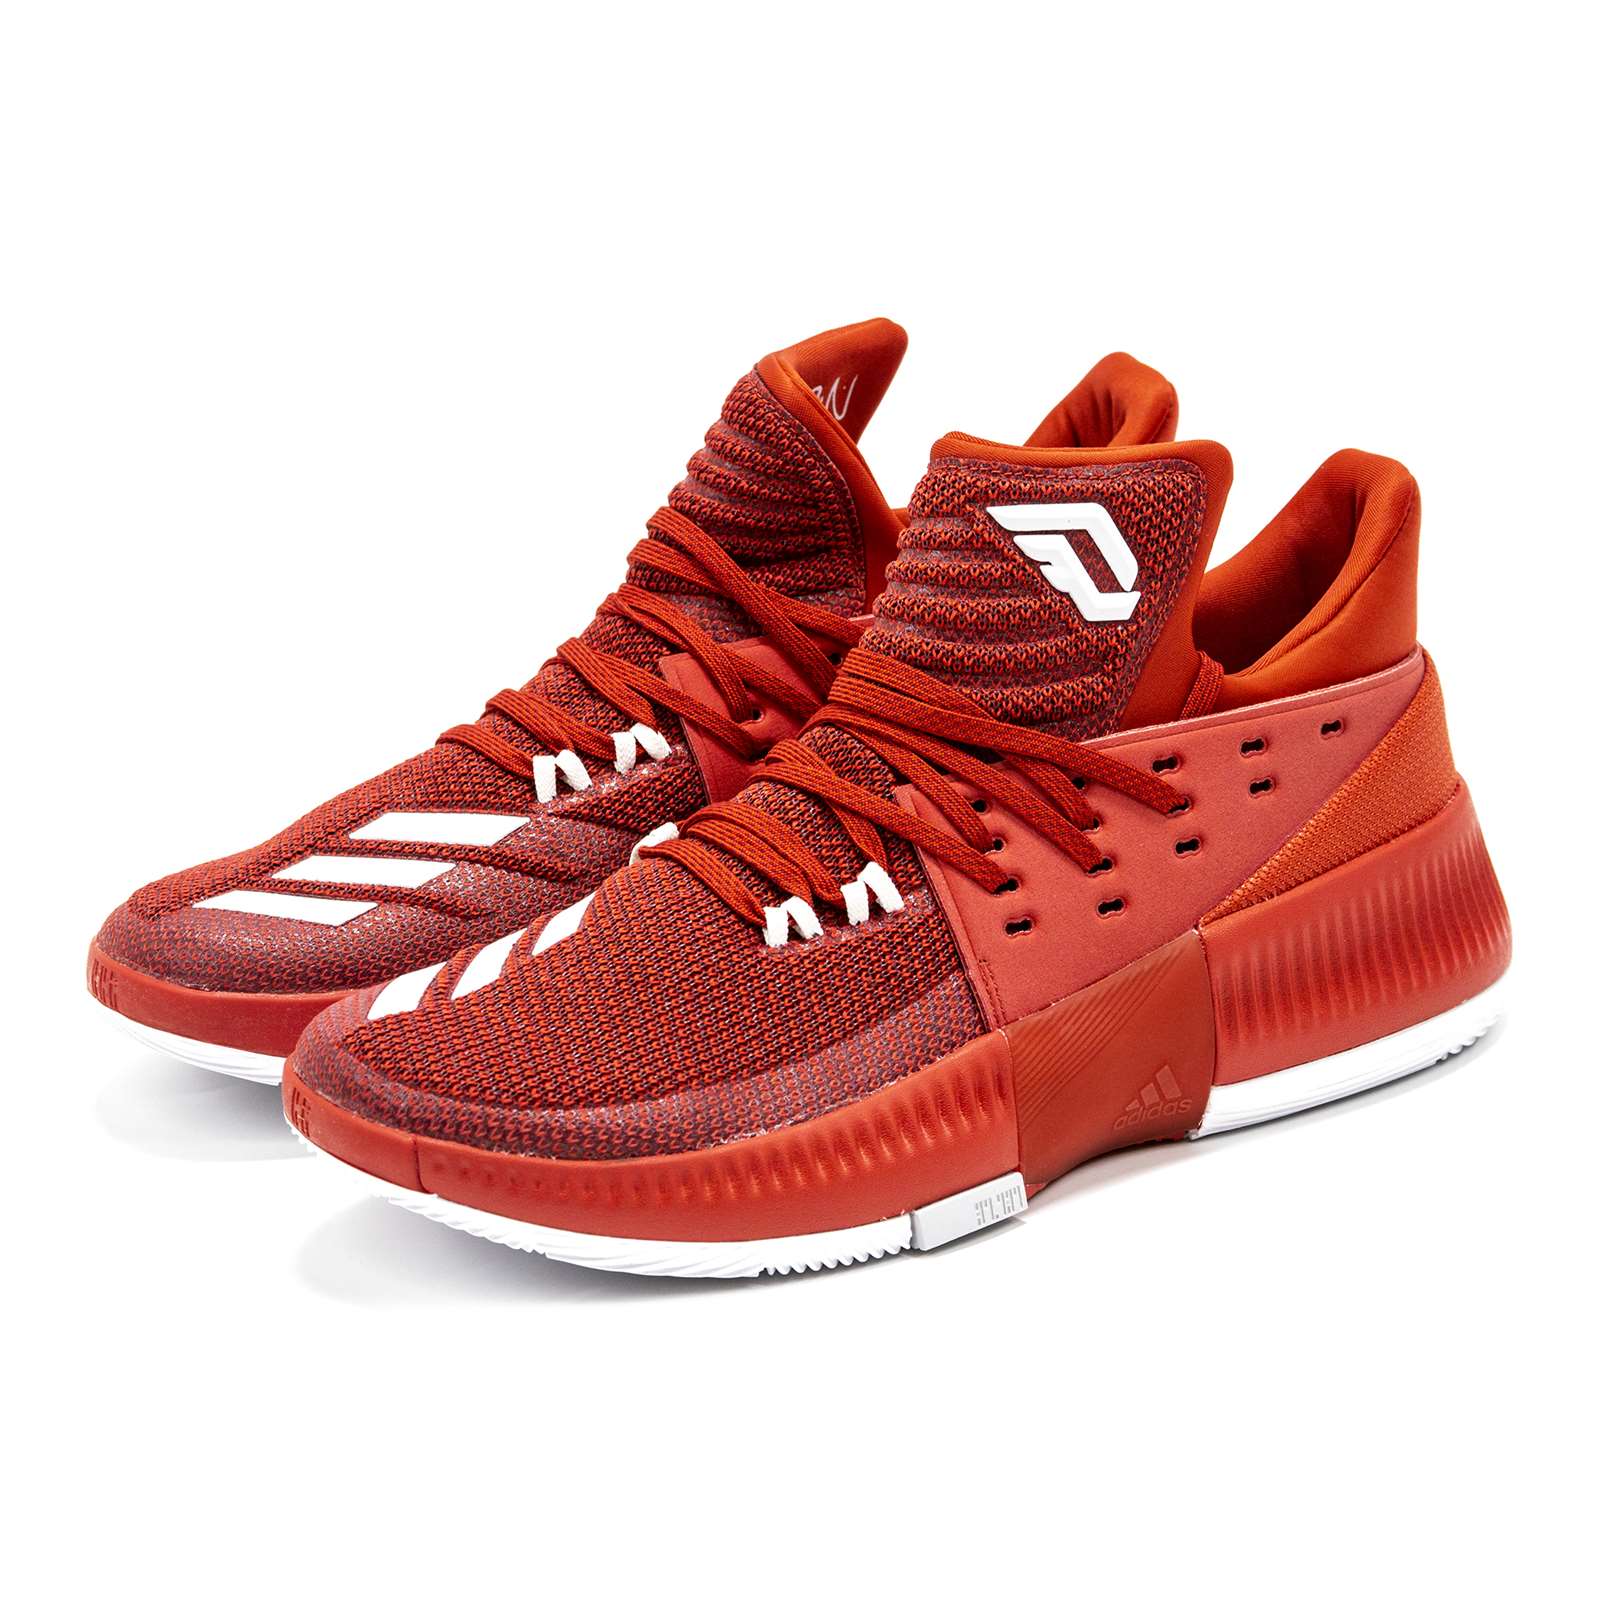 Adidas Men Dame 3 Basketball Shoes